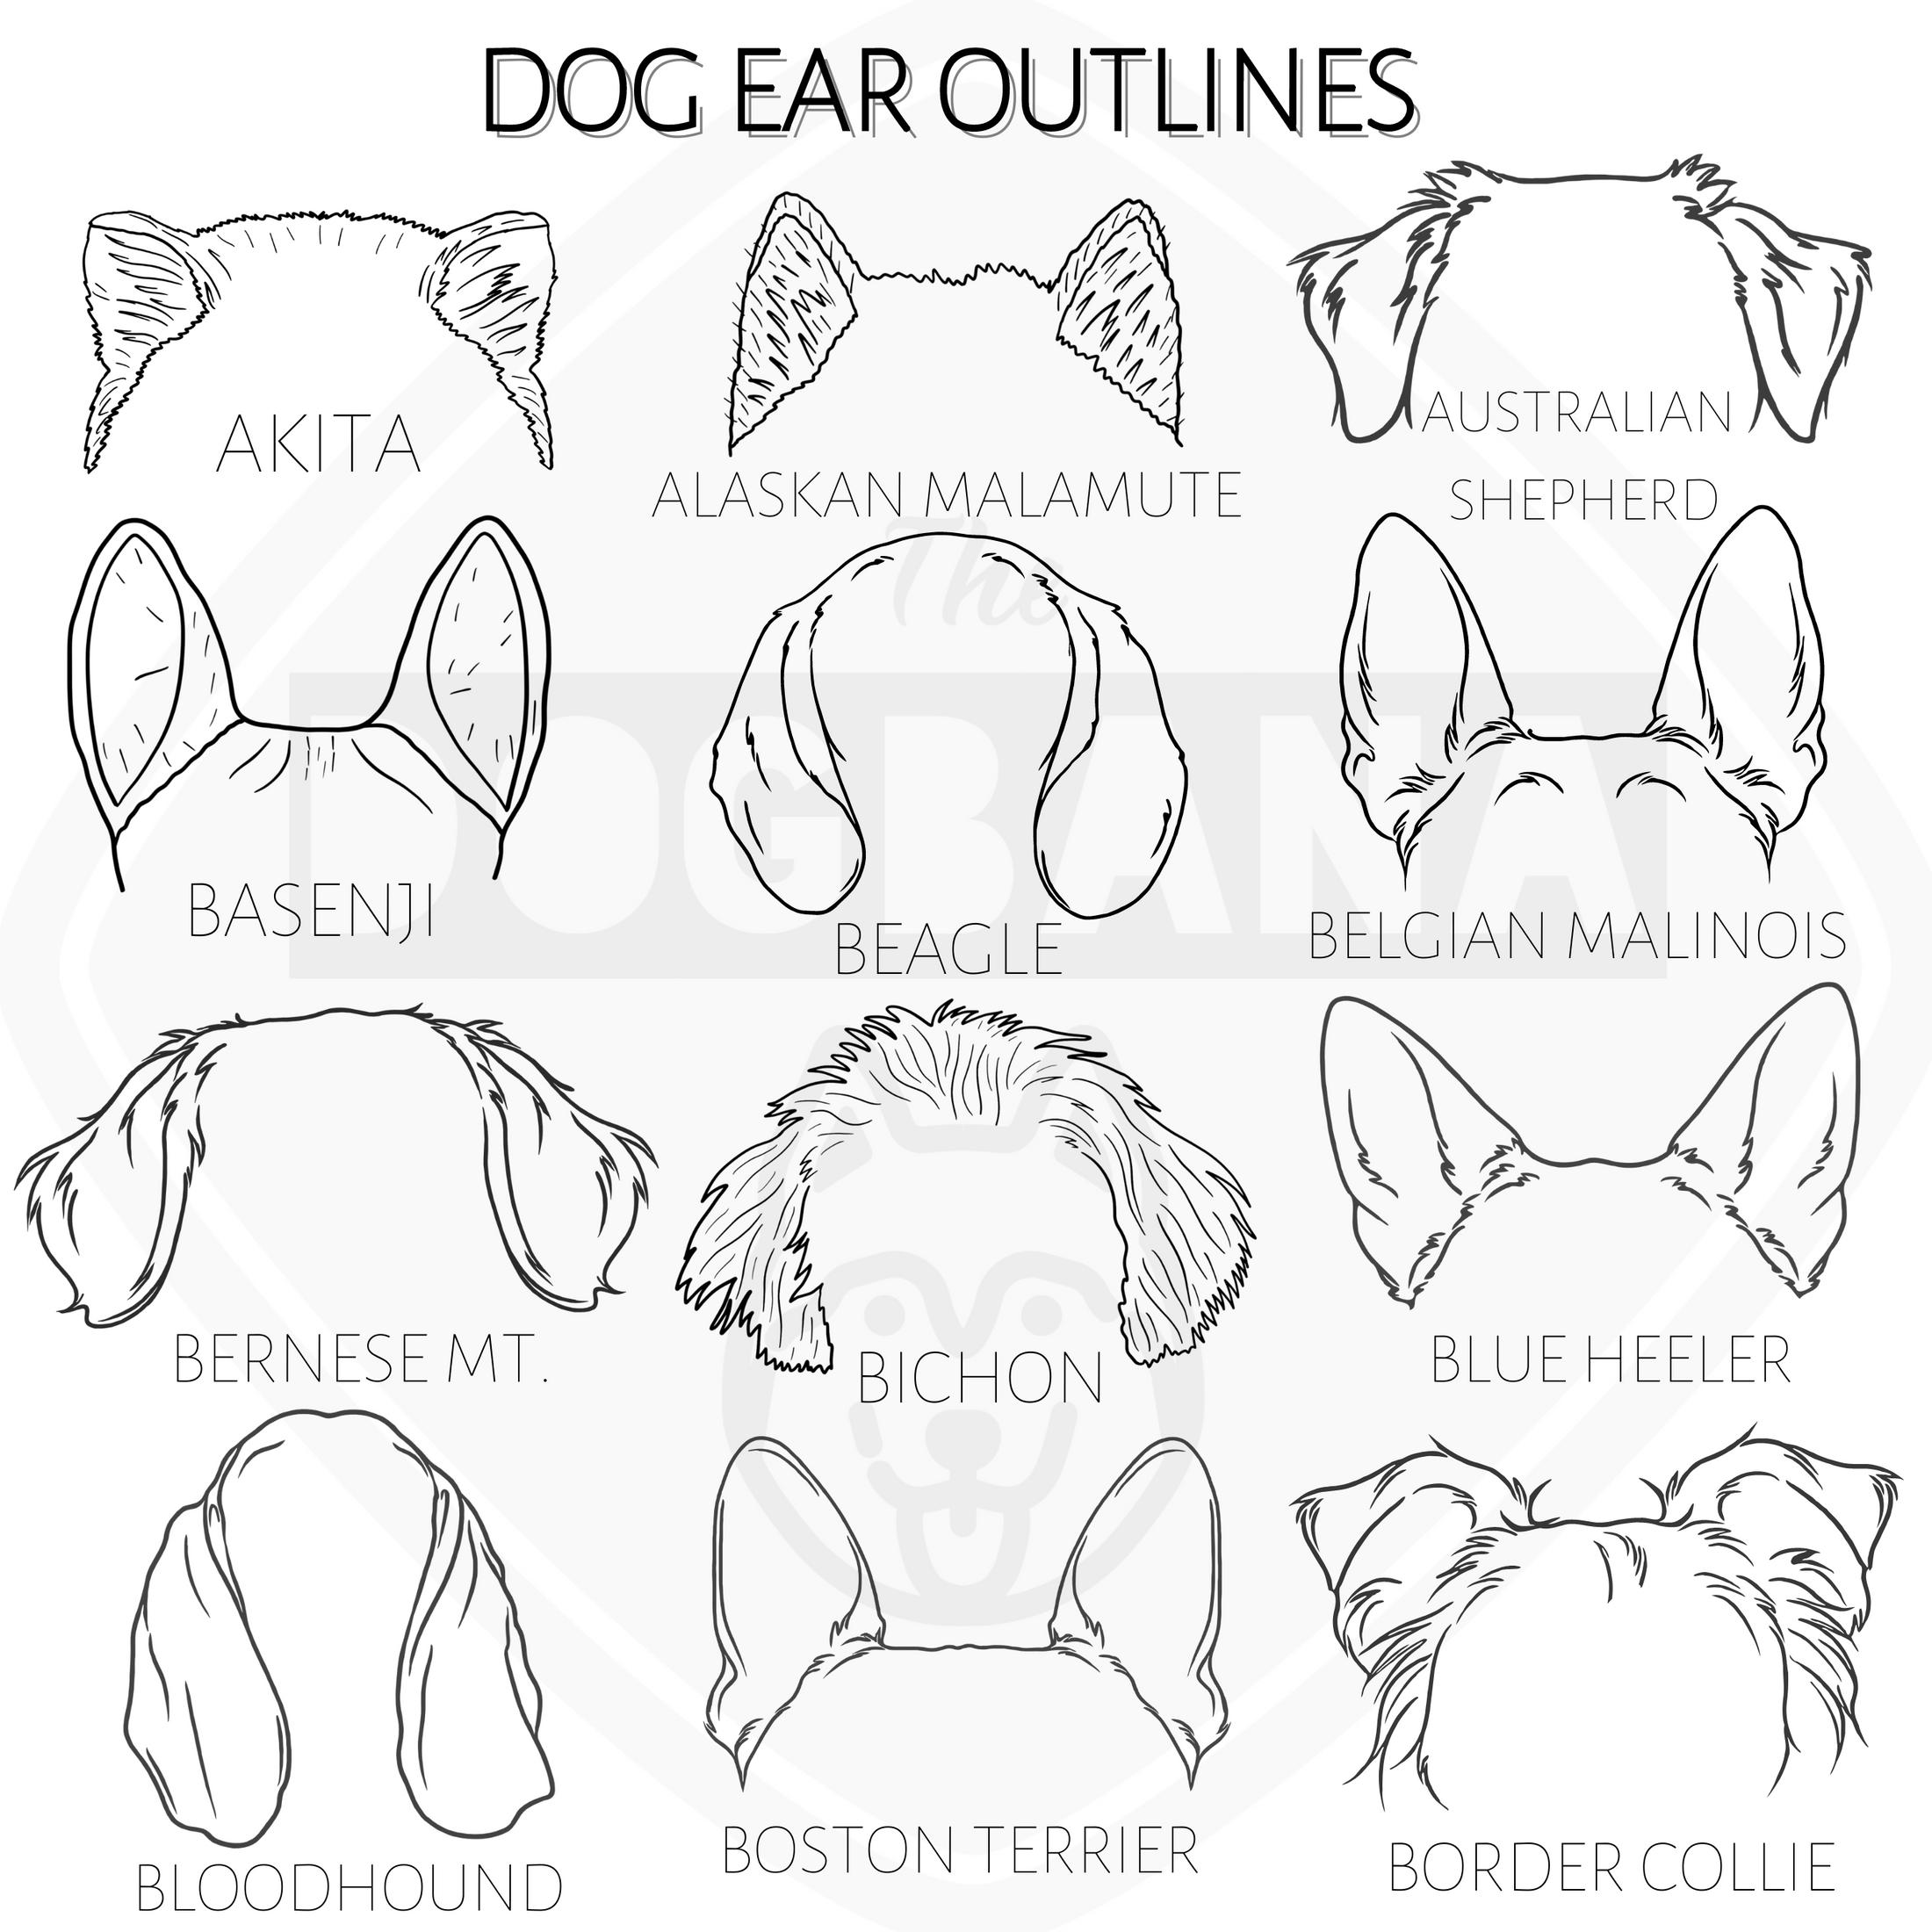 Dog and Cat Ears Outline Crewneck – The Dogbana